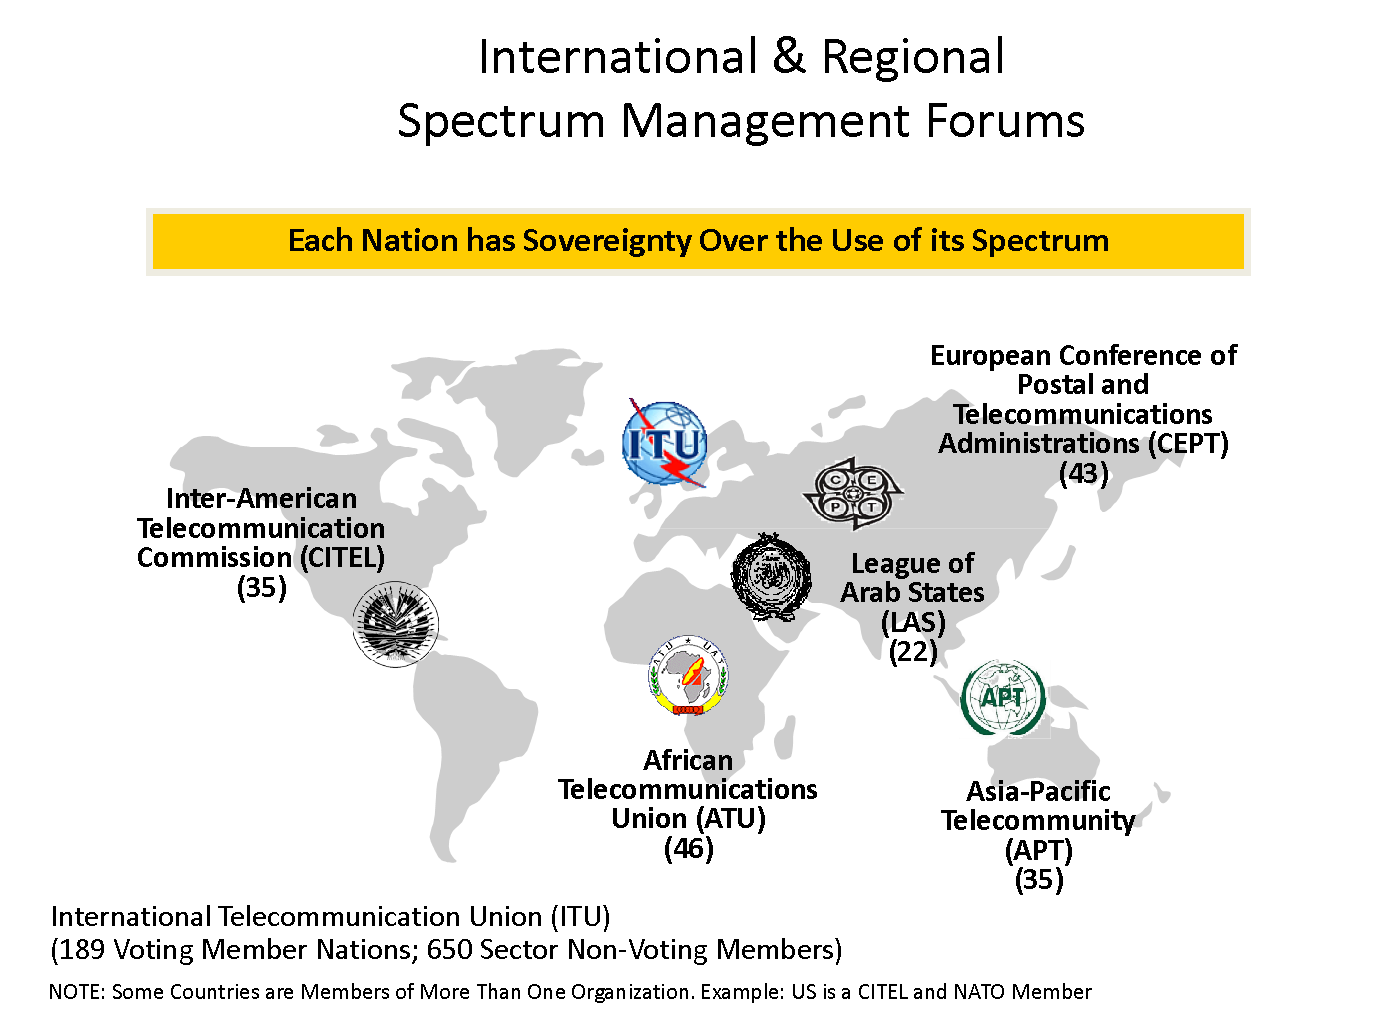 International Telecommunications Councils